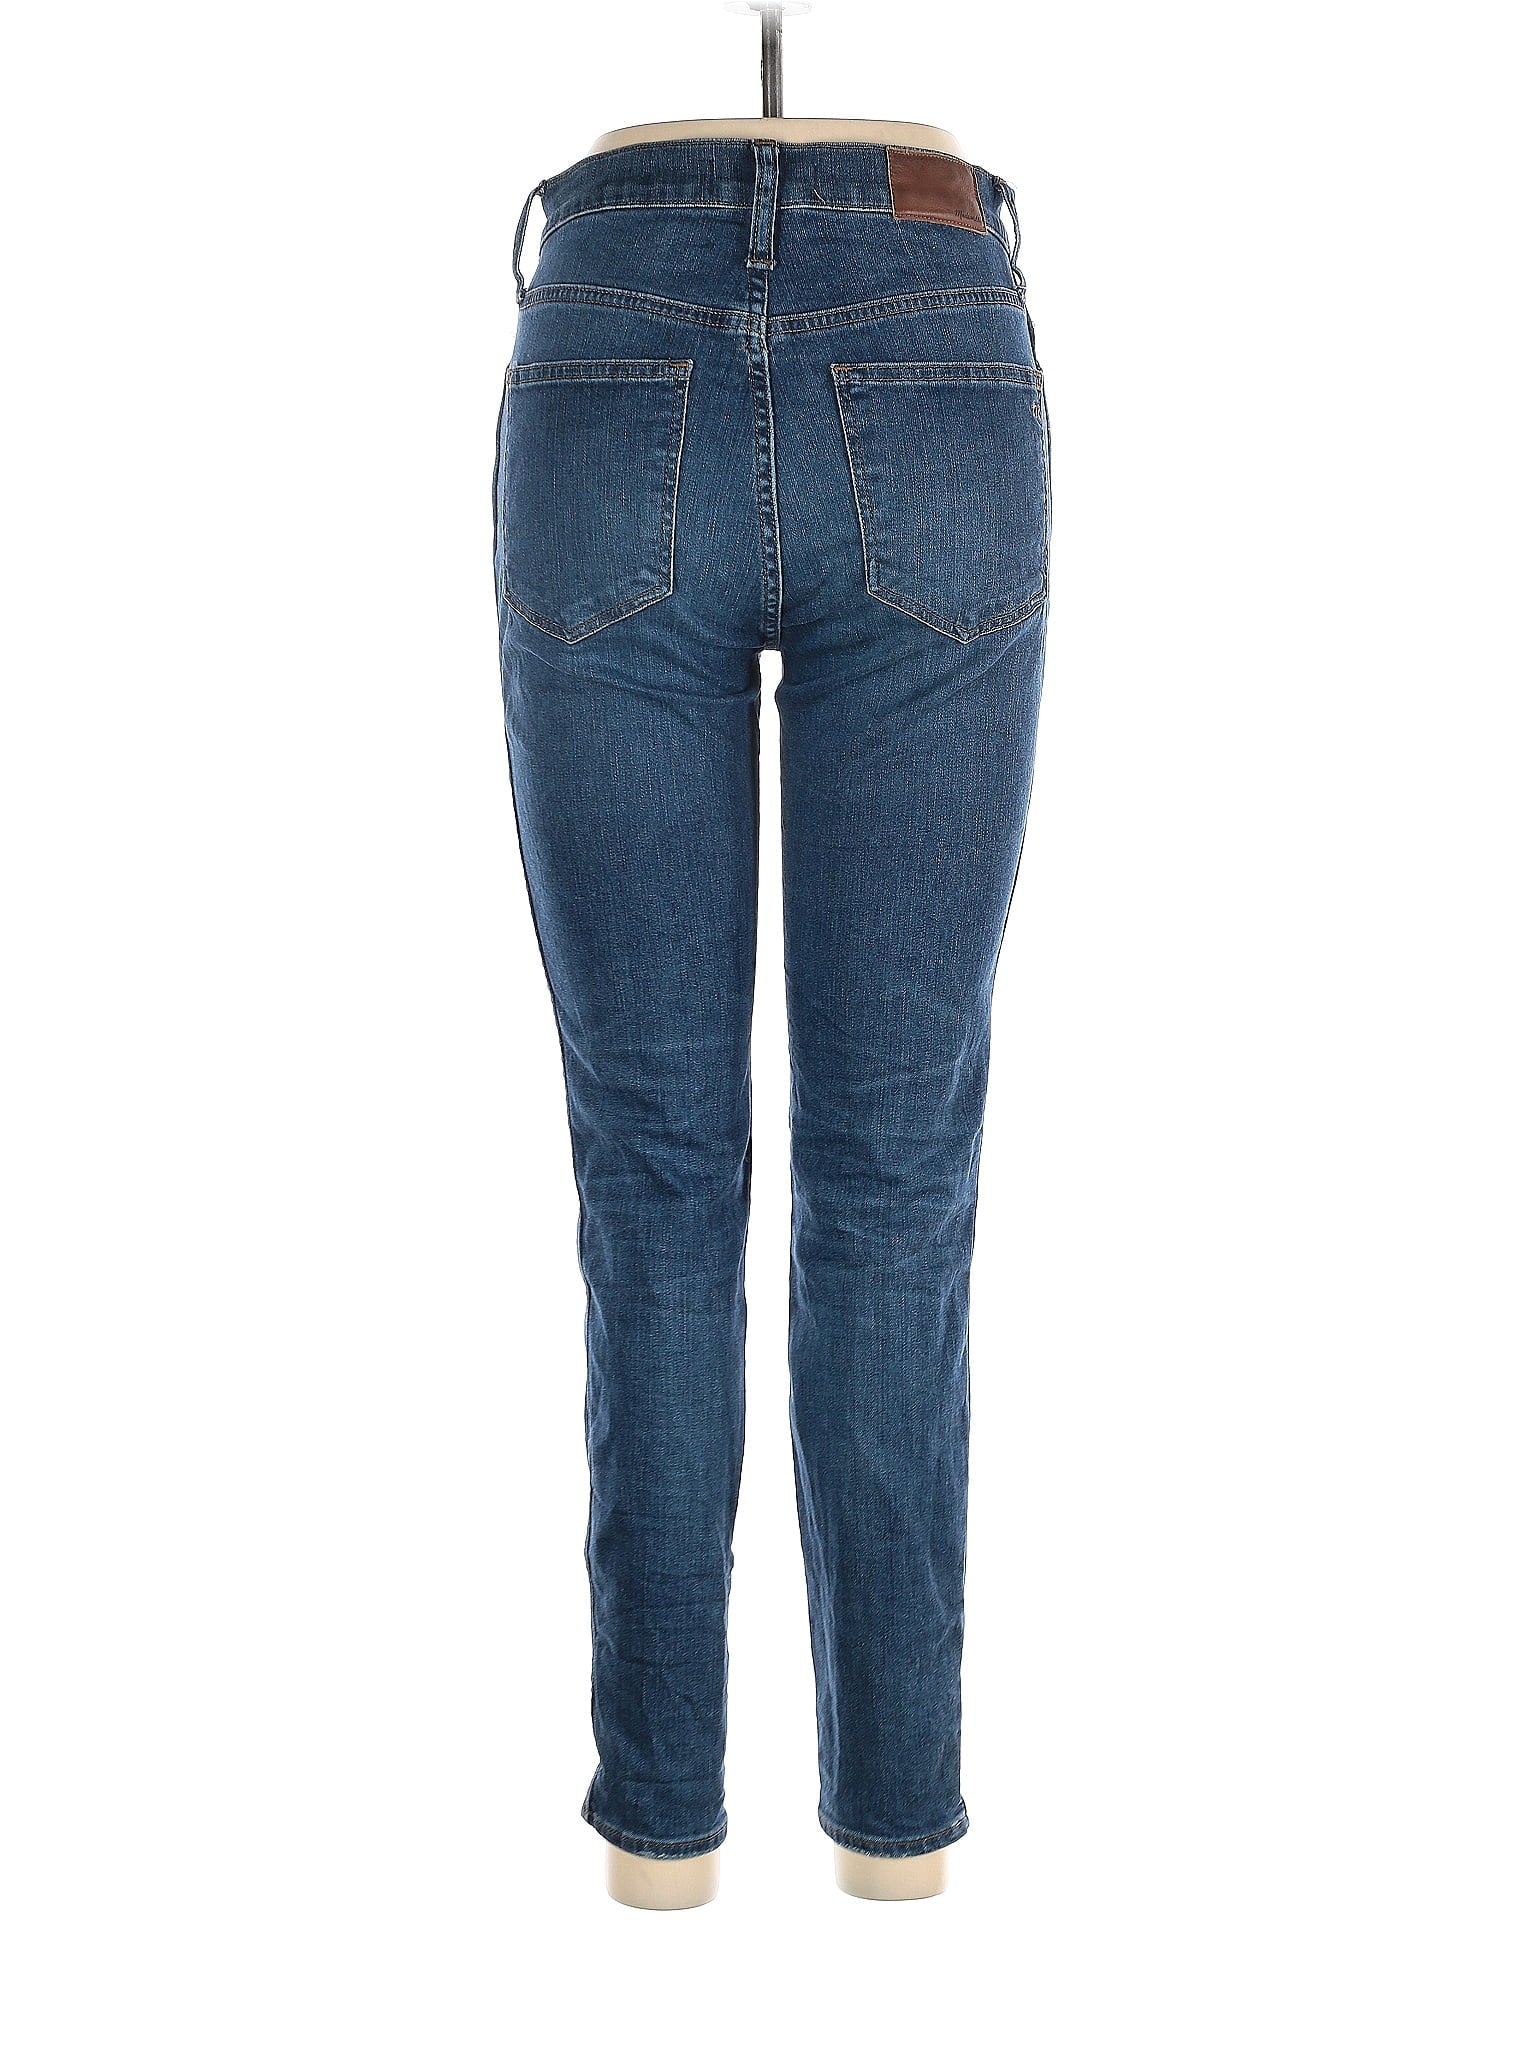 High-Rise Skinny Jeans in Dark Wash waist size - 28 P